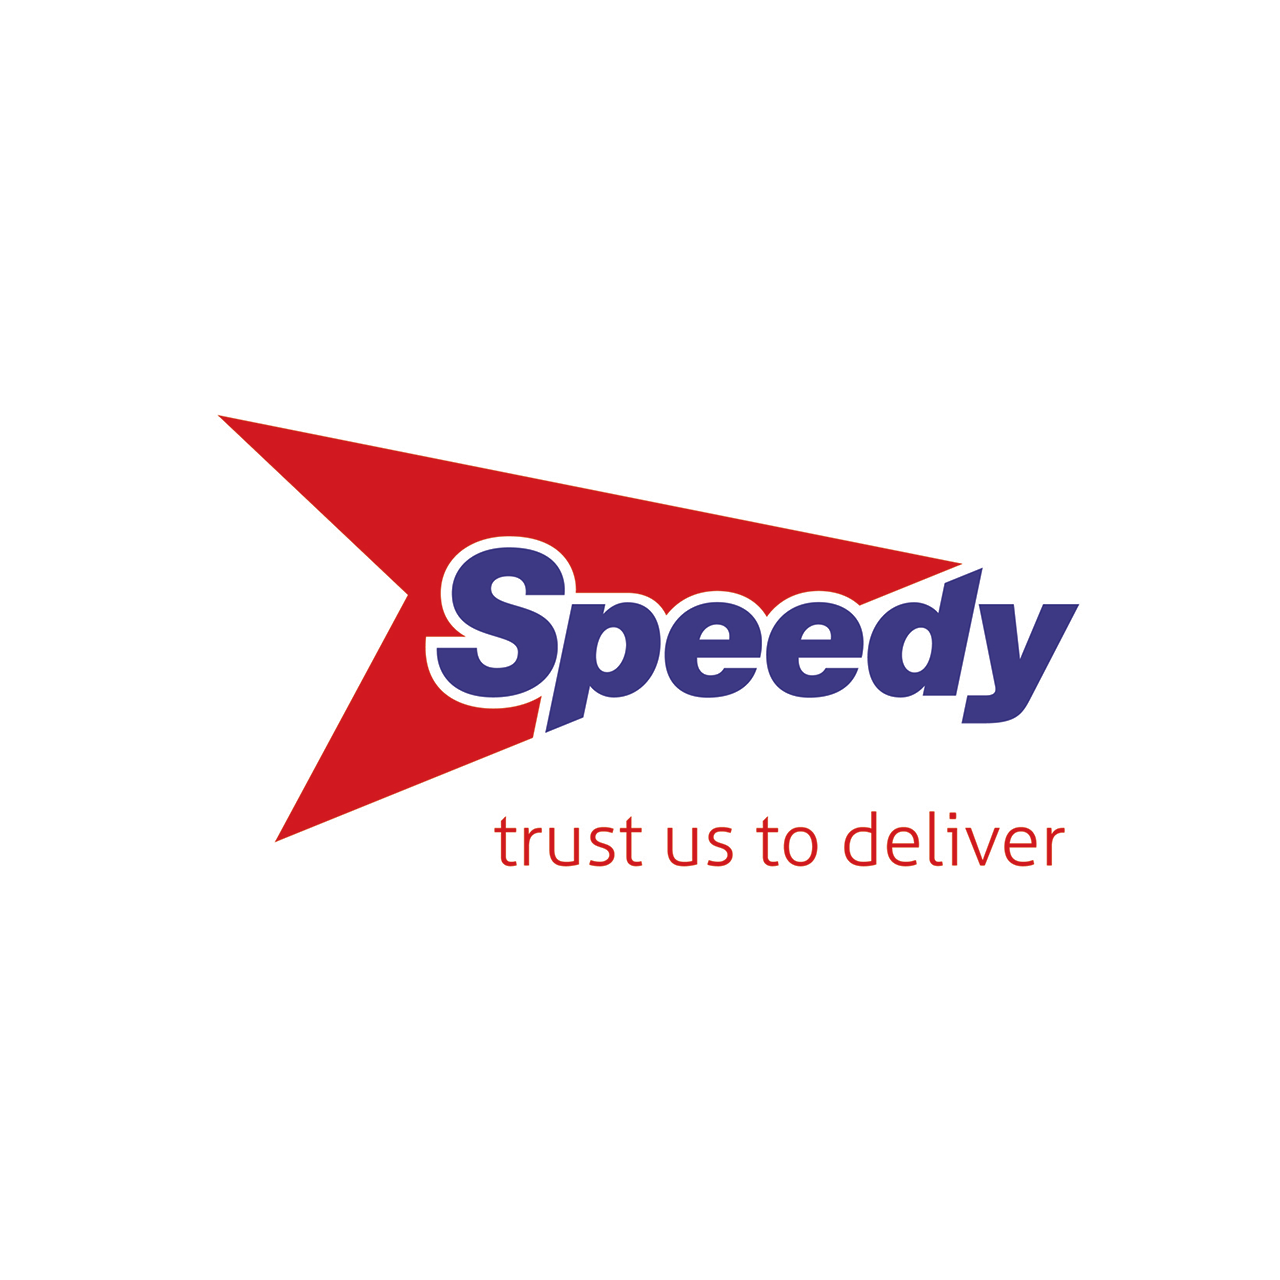 Speedy_trust us to deliver